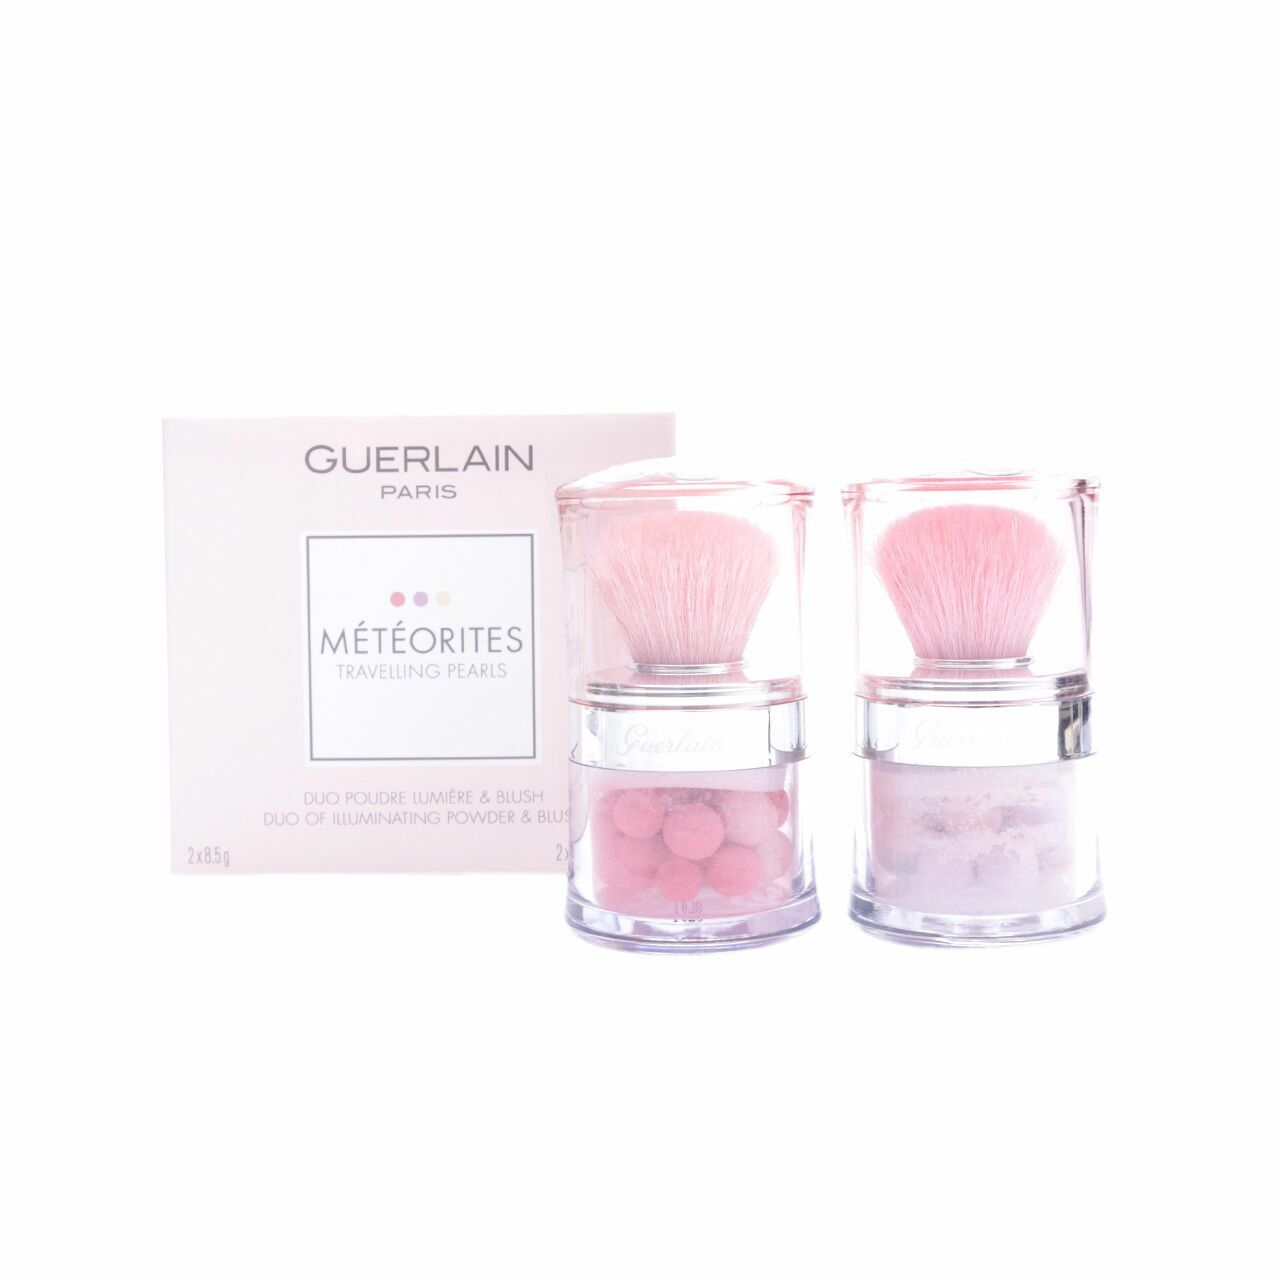 Guerlain 2 Clair/Light Meteorites Travelling Pearl Duo Of Illuminating Powder & Blush Faces